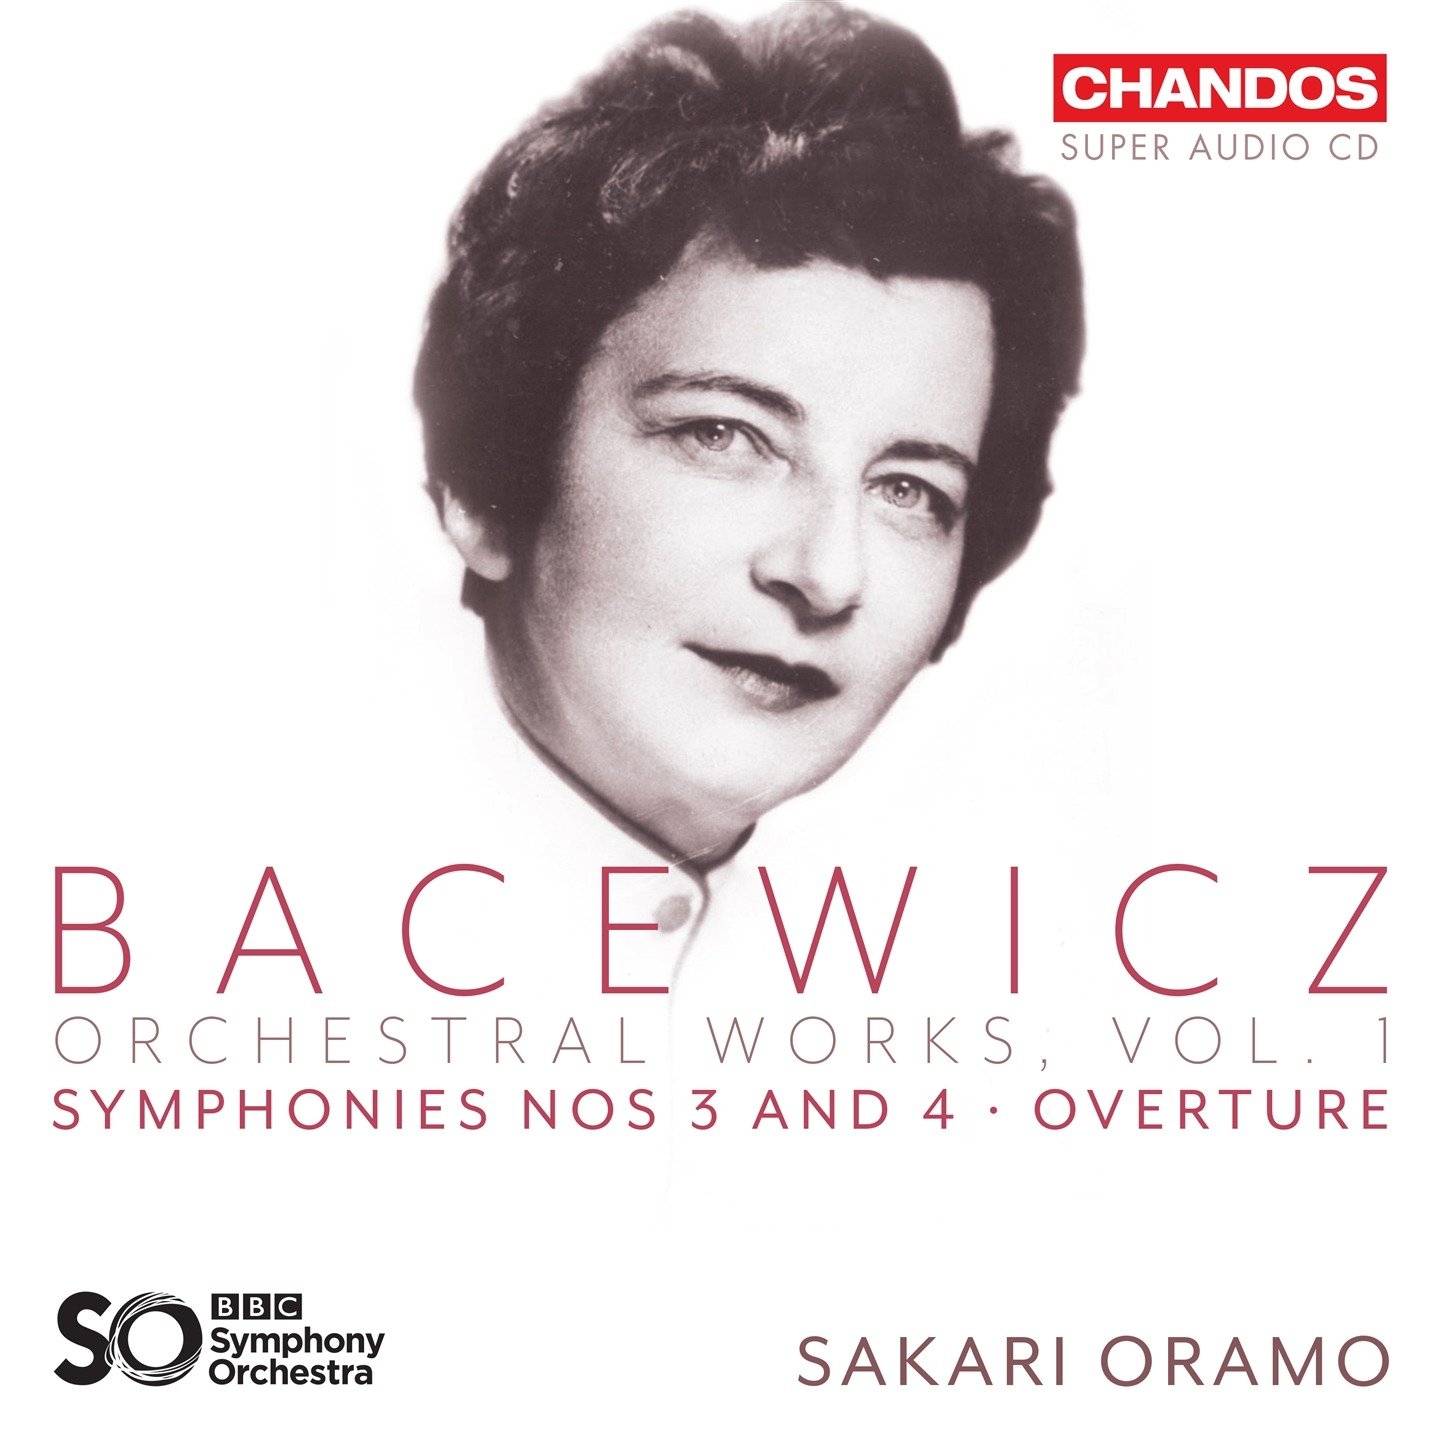 CD Shop - BBC SYMPHONY ORCHESTRA / Bacewicz Orchestral Works Vol. 1